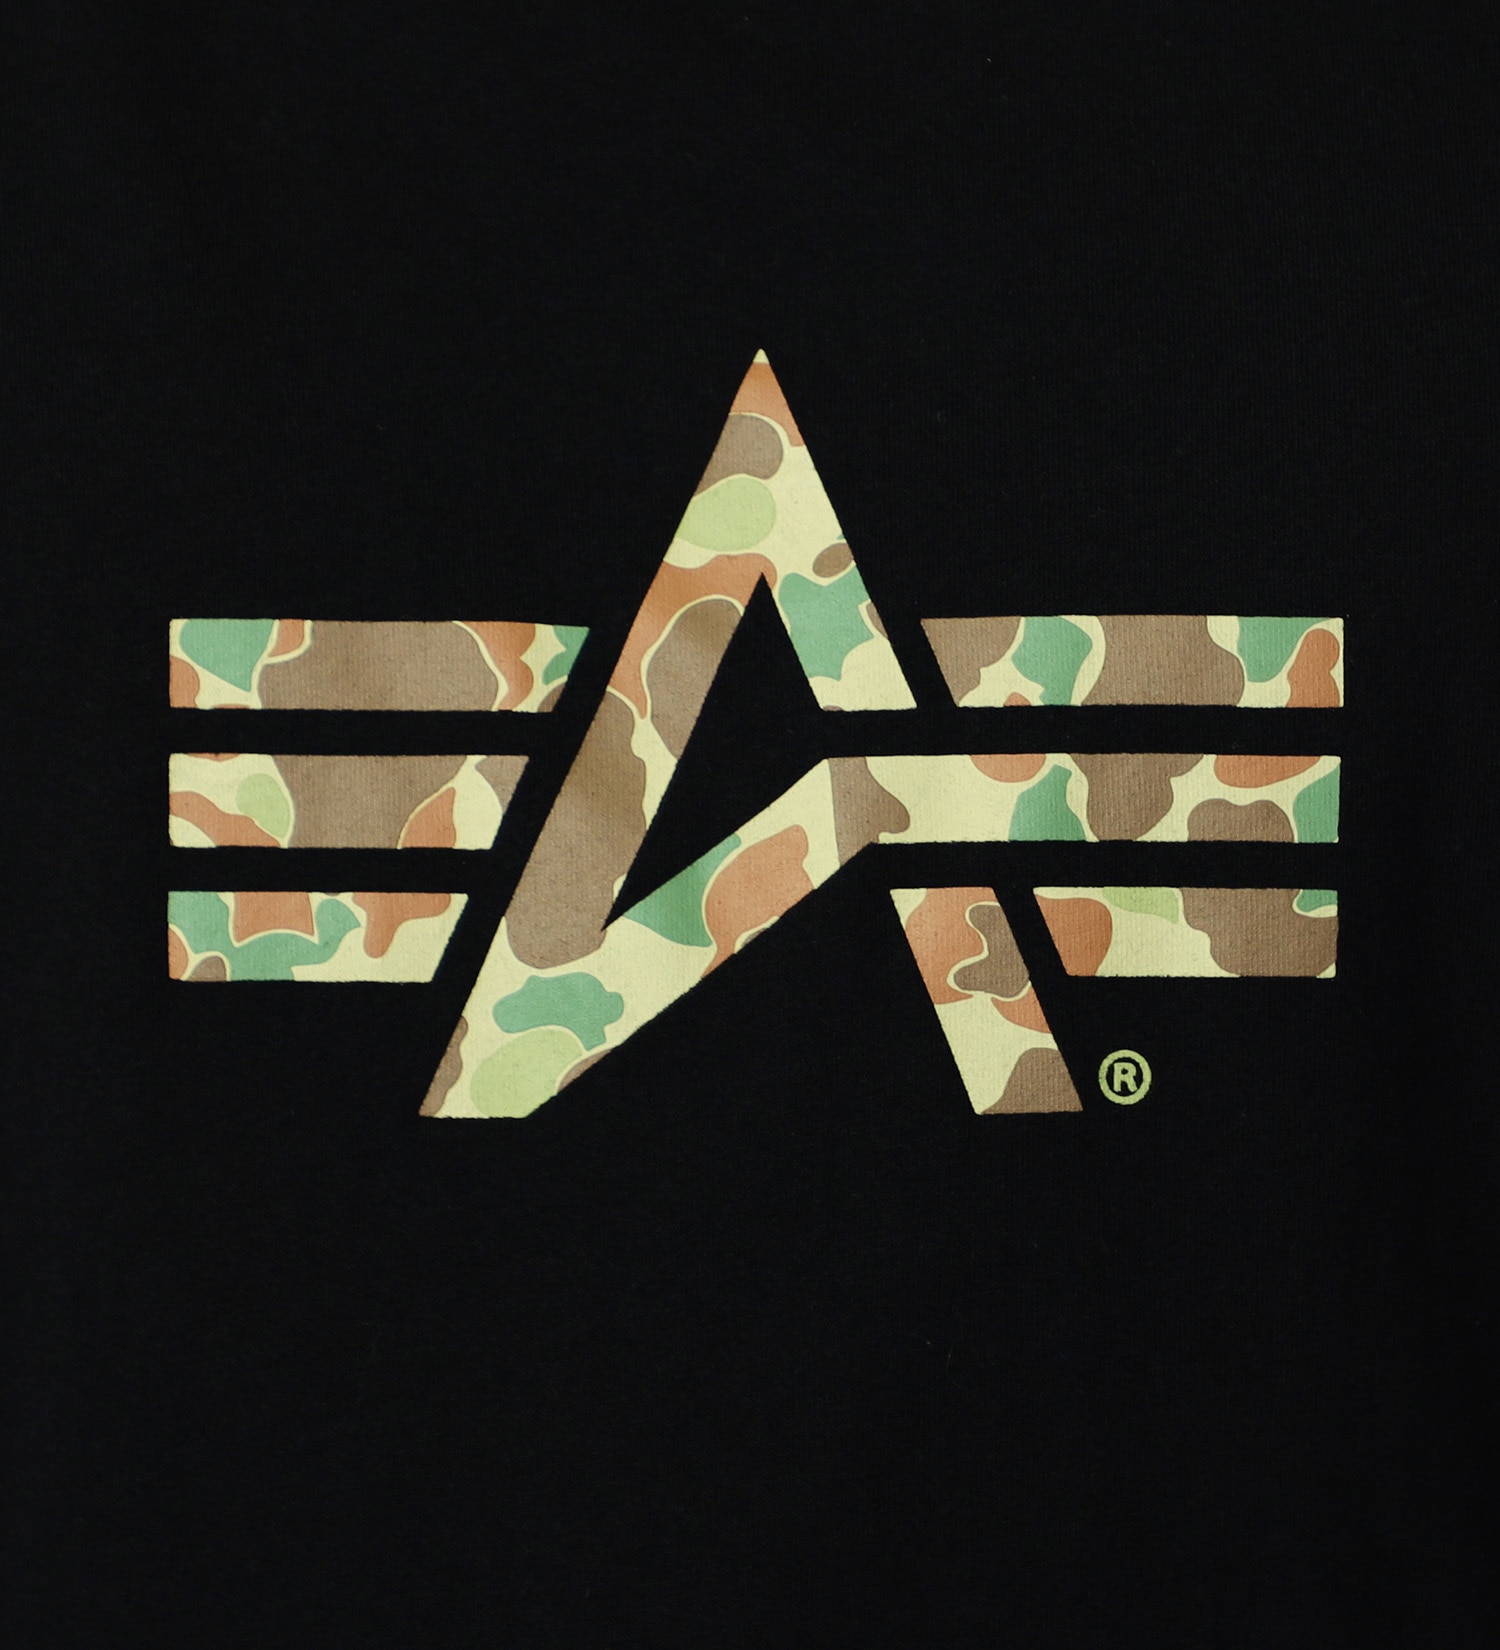 ALPHA(アルファ)のAマークロゴプリントTシャツ 半袖 (グリーンフロッグスキンカモ)|トップス/Tシャツ/カットソー/メンズ|ブラック